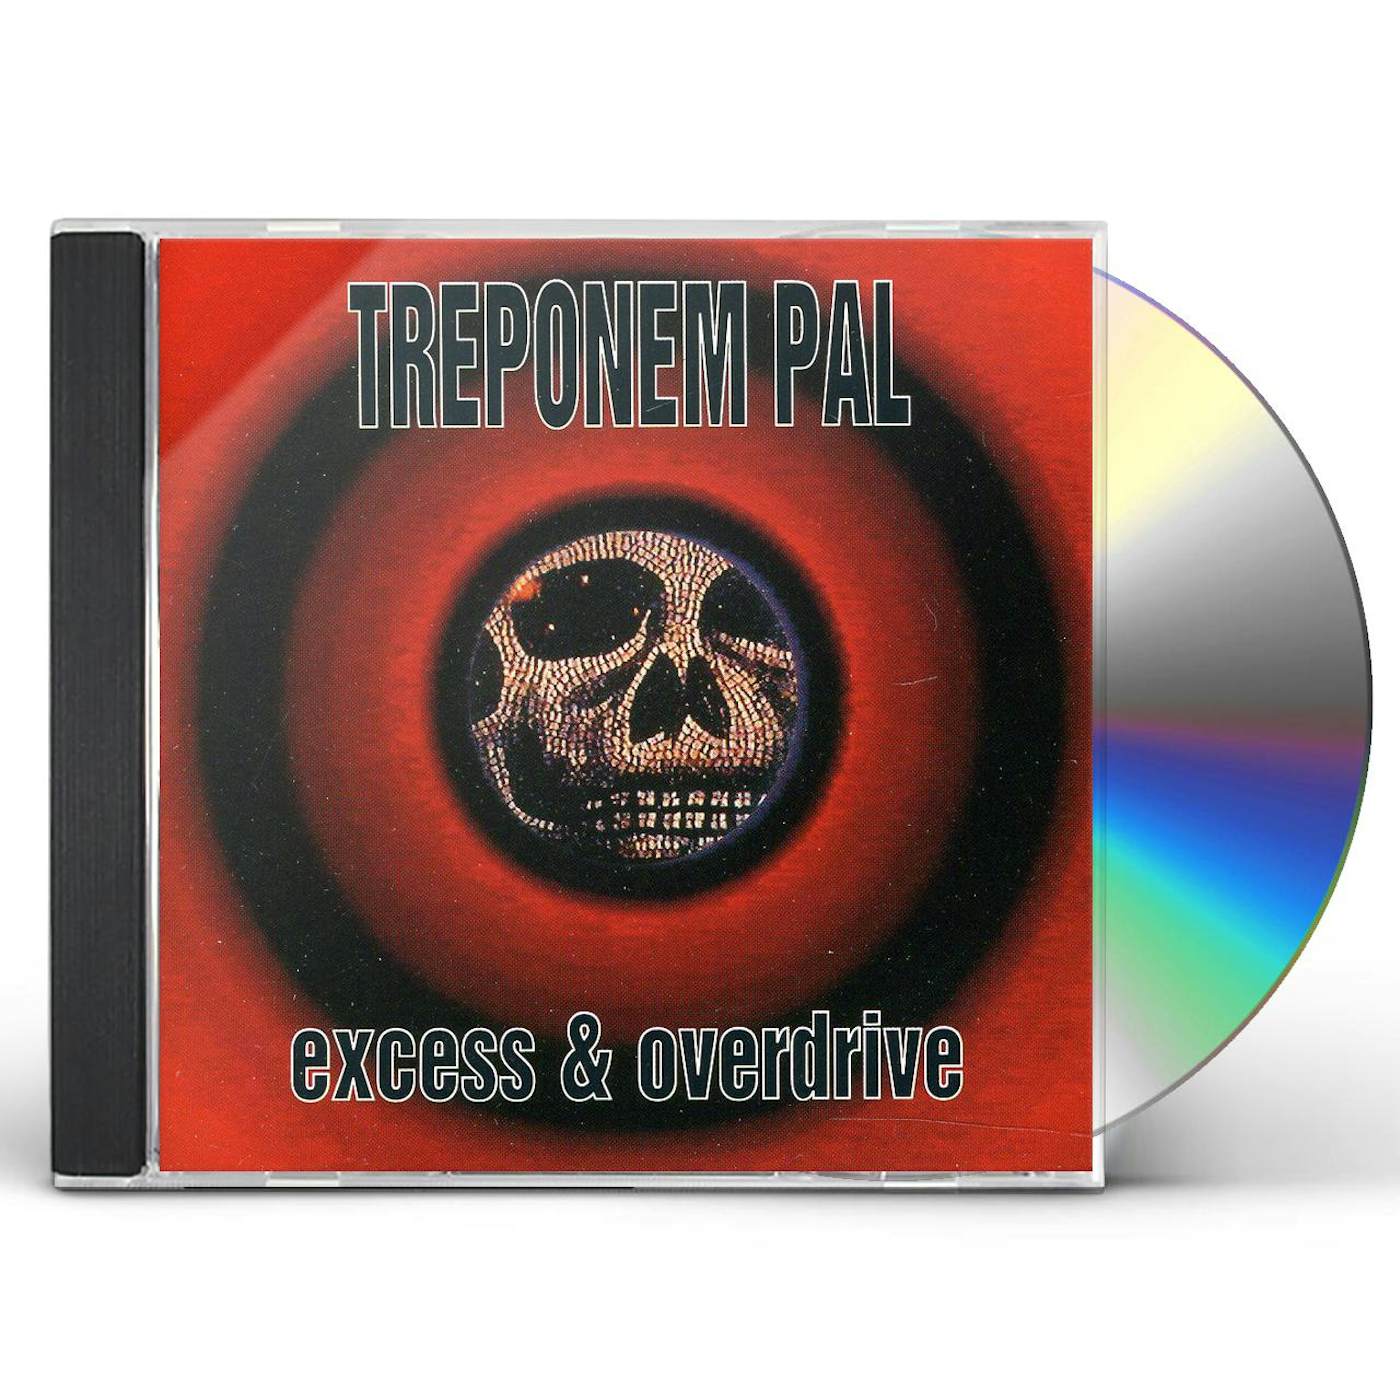 Treponem Pal EXCESS & OVERDRIVE CD